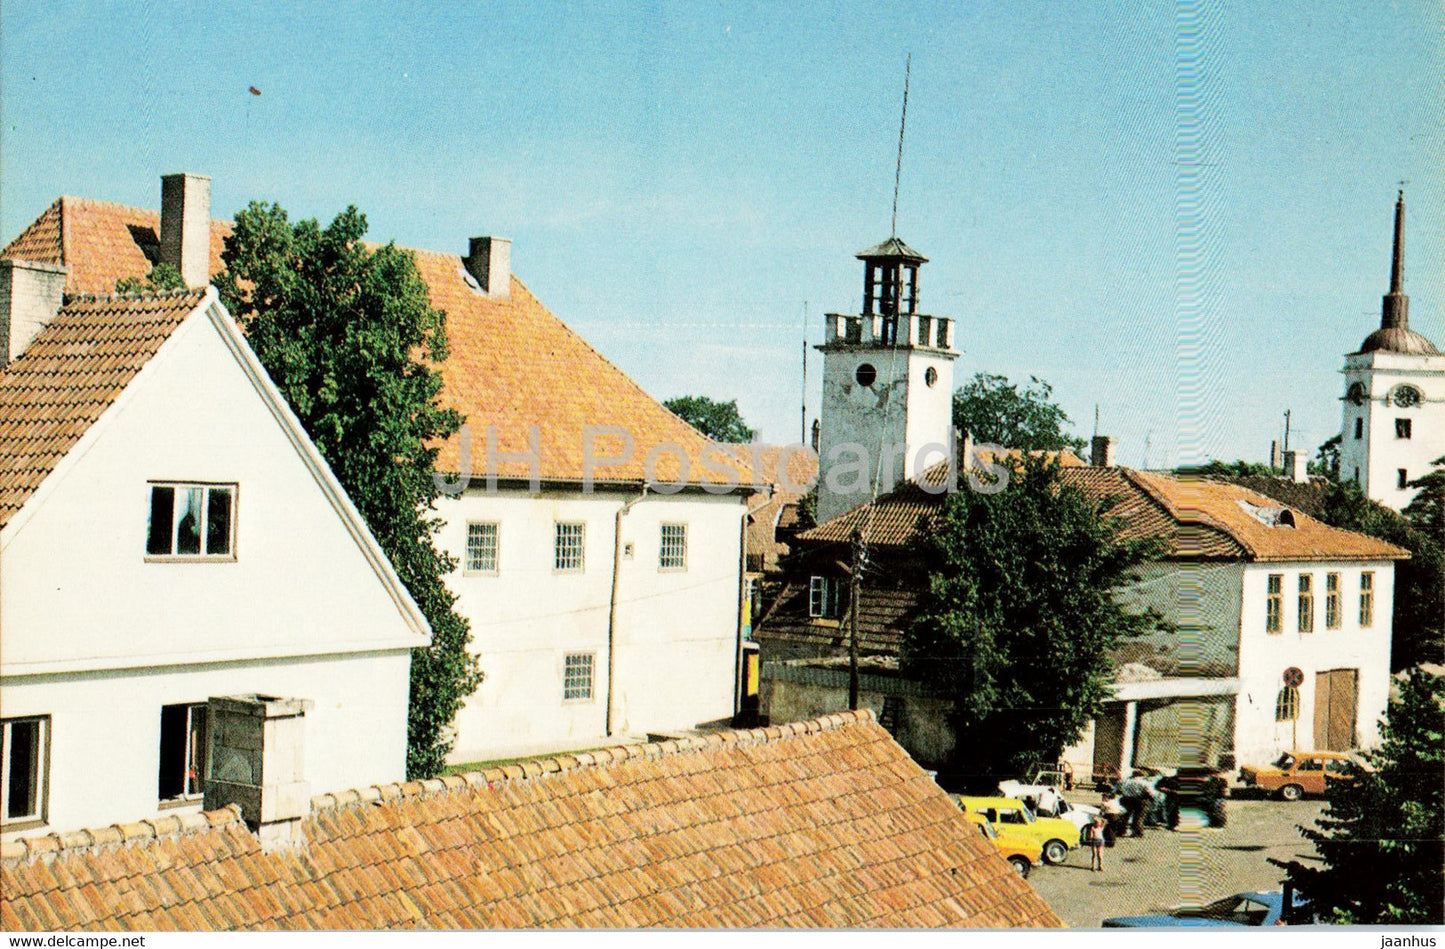 Old Town in Kuressaare - Saaremaa - 1989 - Estonia USSR - unused - JH Postcards